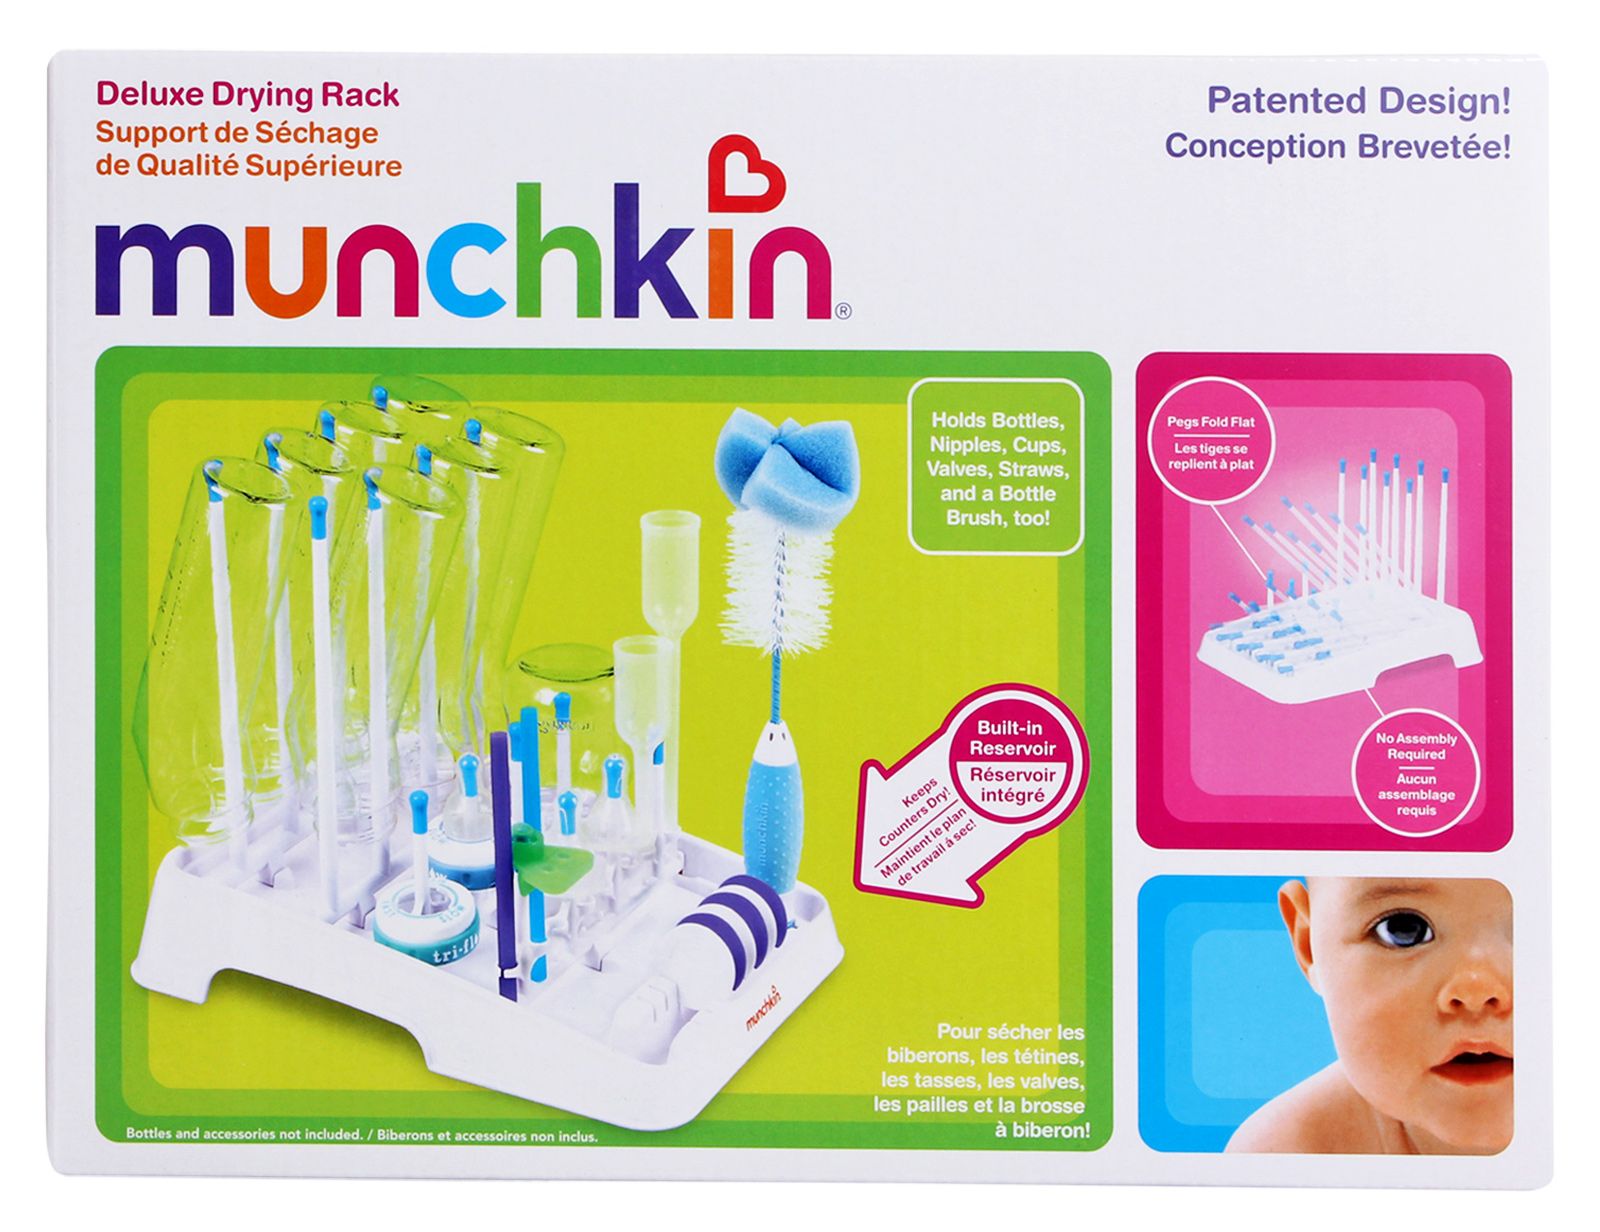 Munchkin - Deluxe Drying Rack